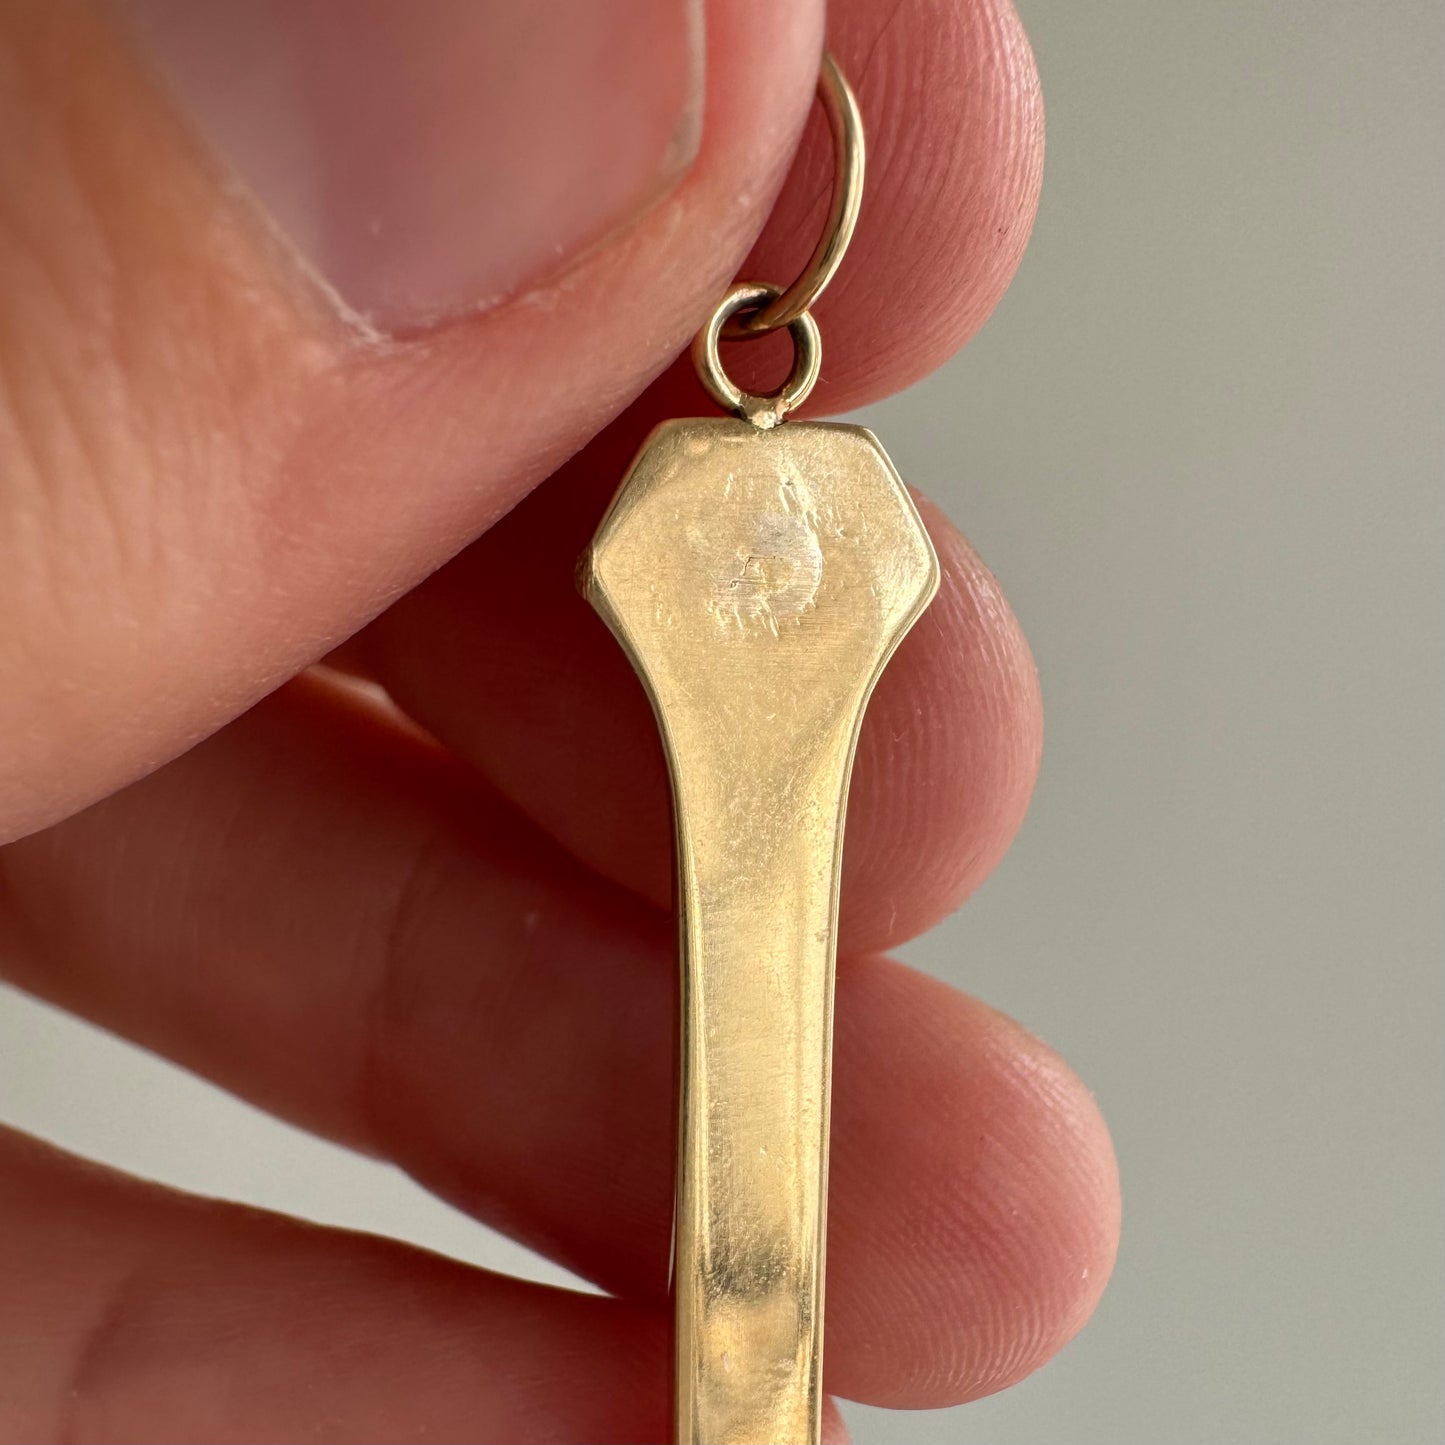 reimagined A N T I Q U E // timeless spike / 14k yellow gold victorian horseshoe spike / a brooch conversion pendant